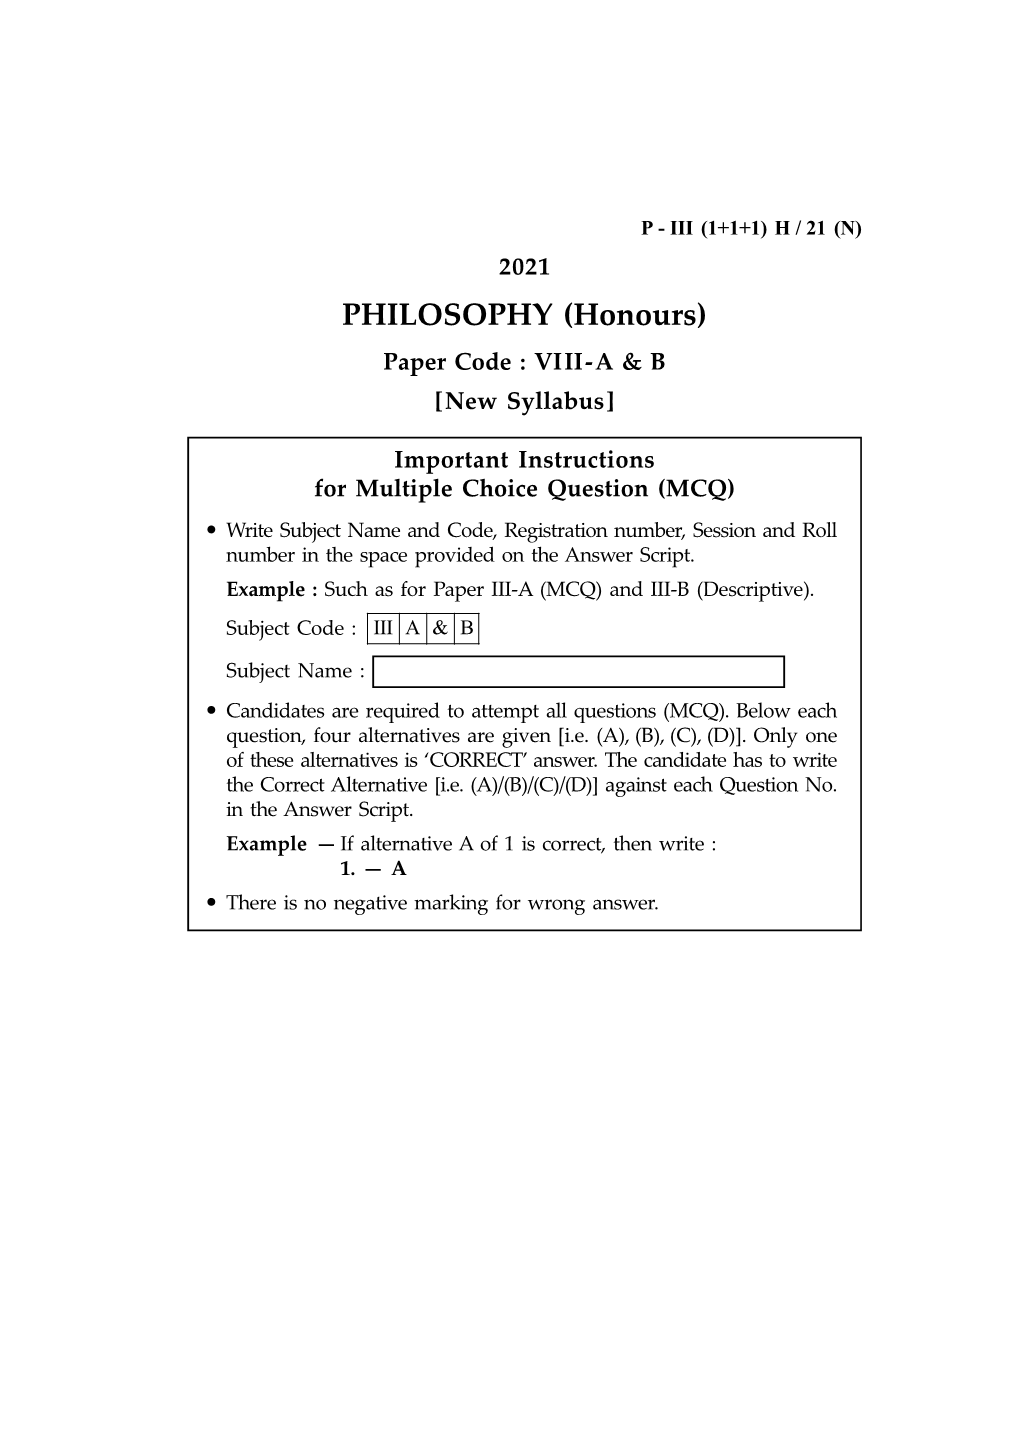 PHILOSOPHY (Honours) Paper Code : VIII-A & B [New Syllabus]